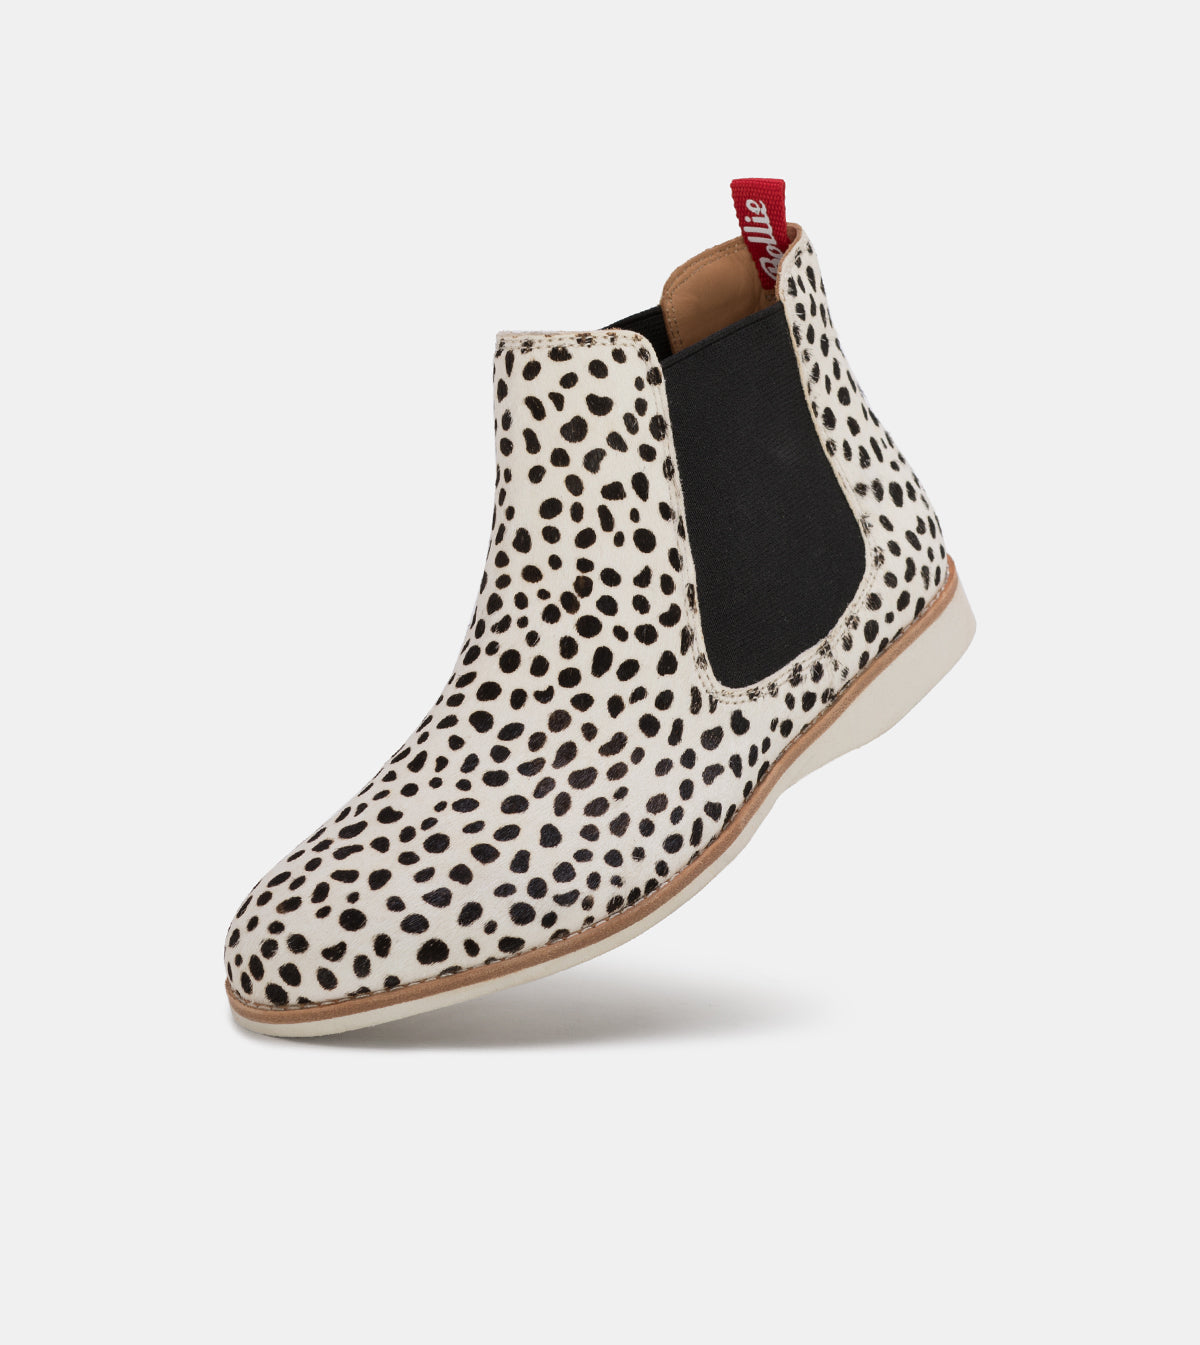 rollie snow leopard boots